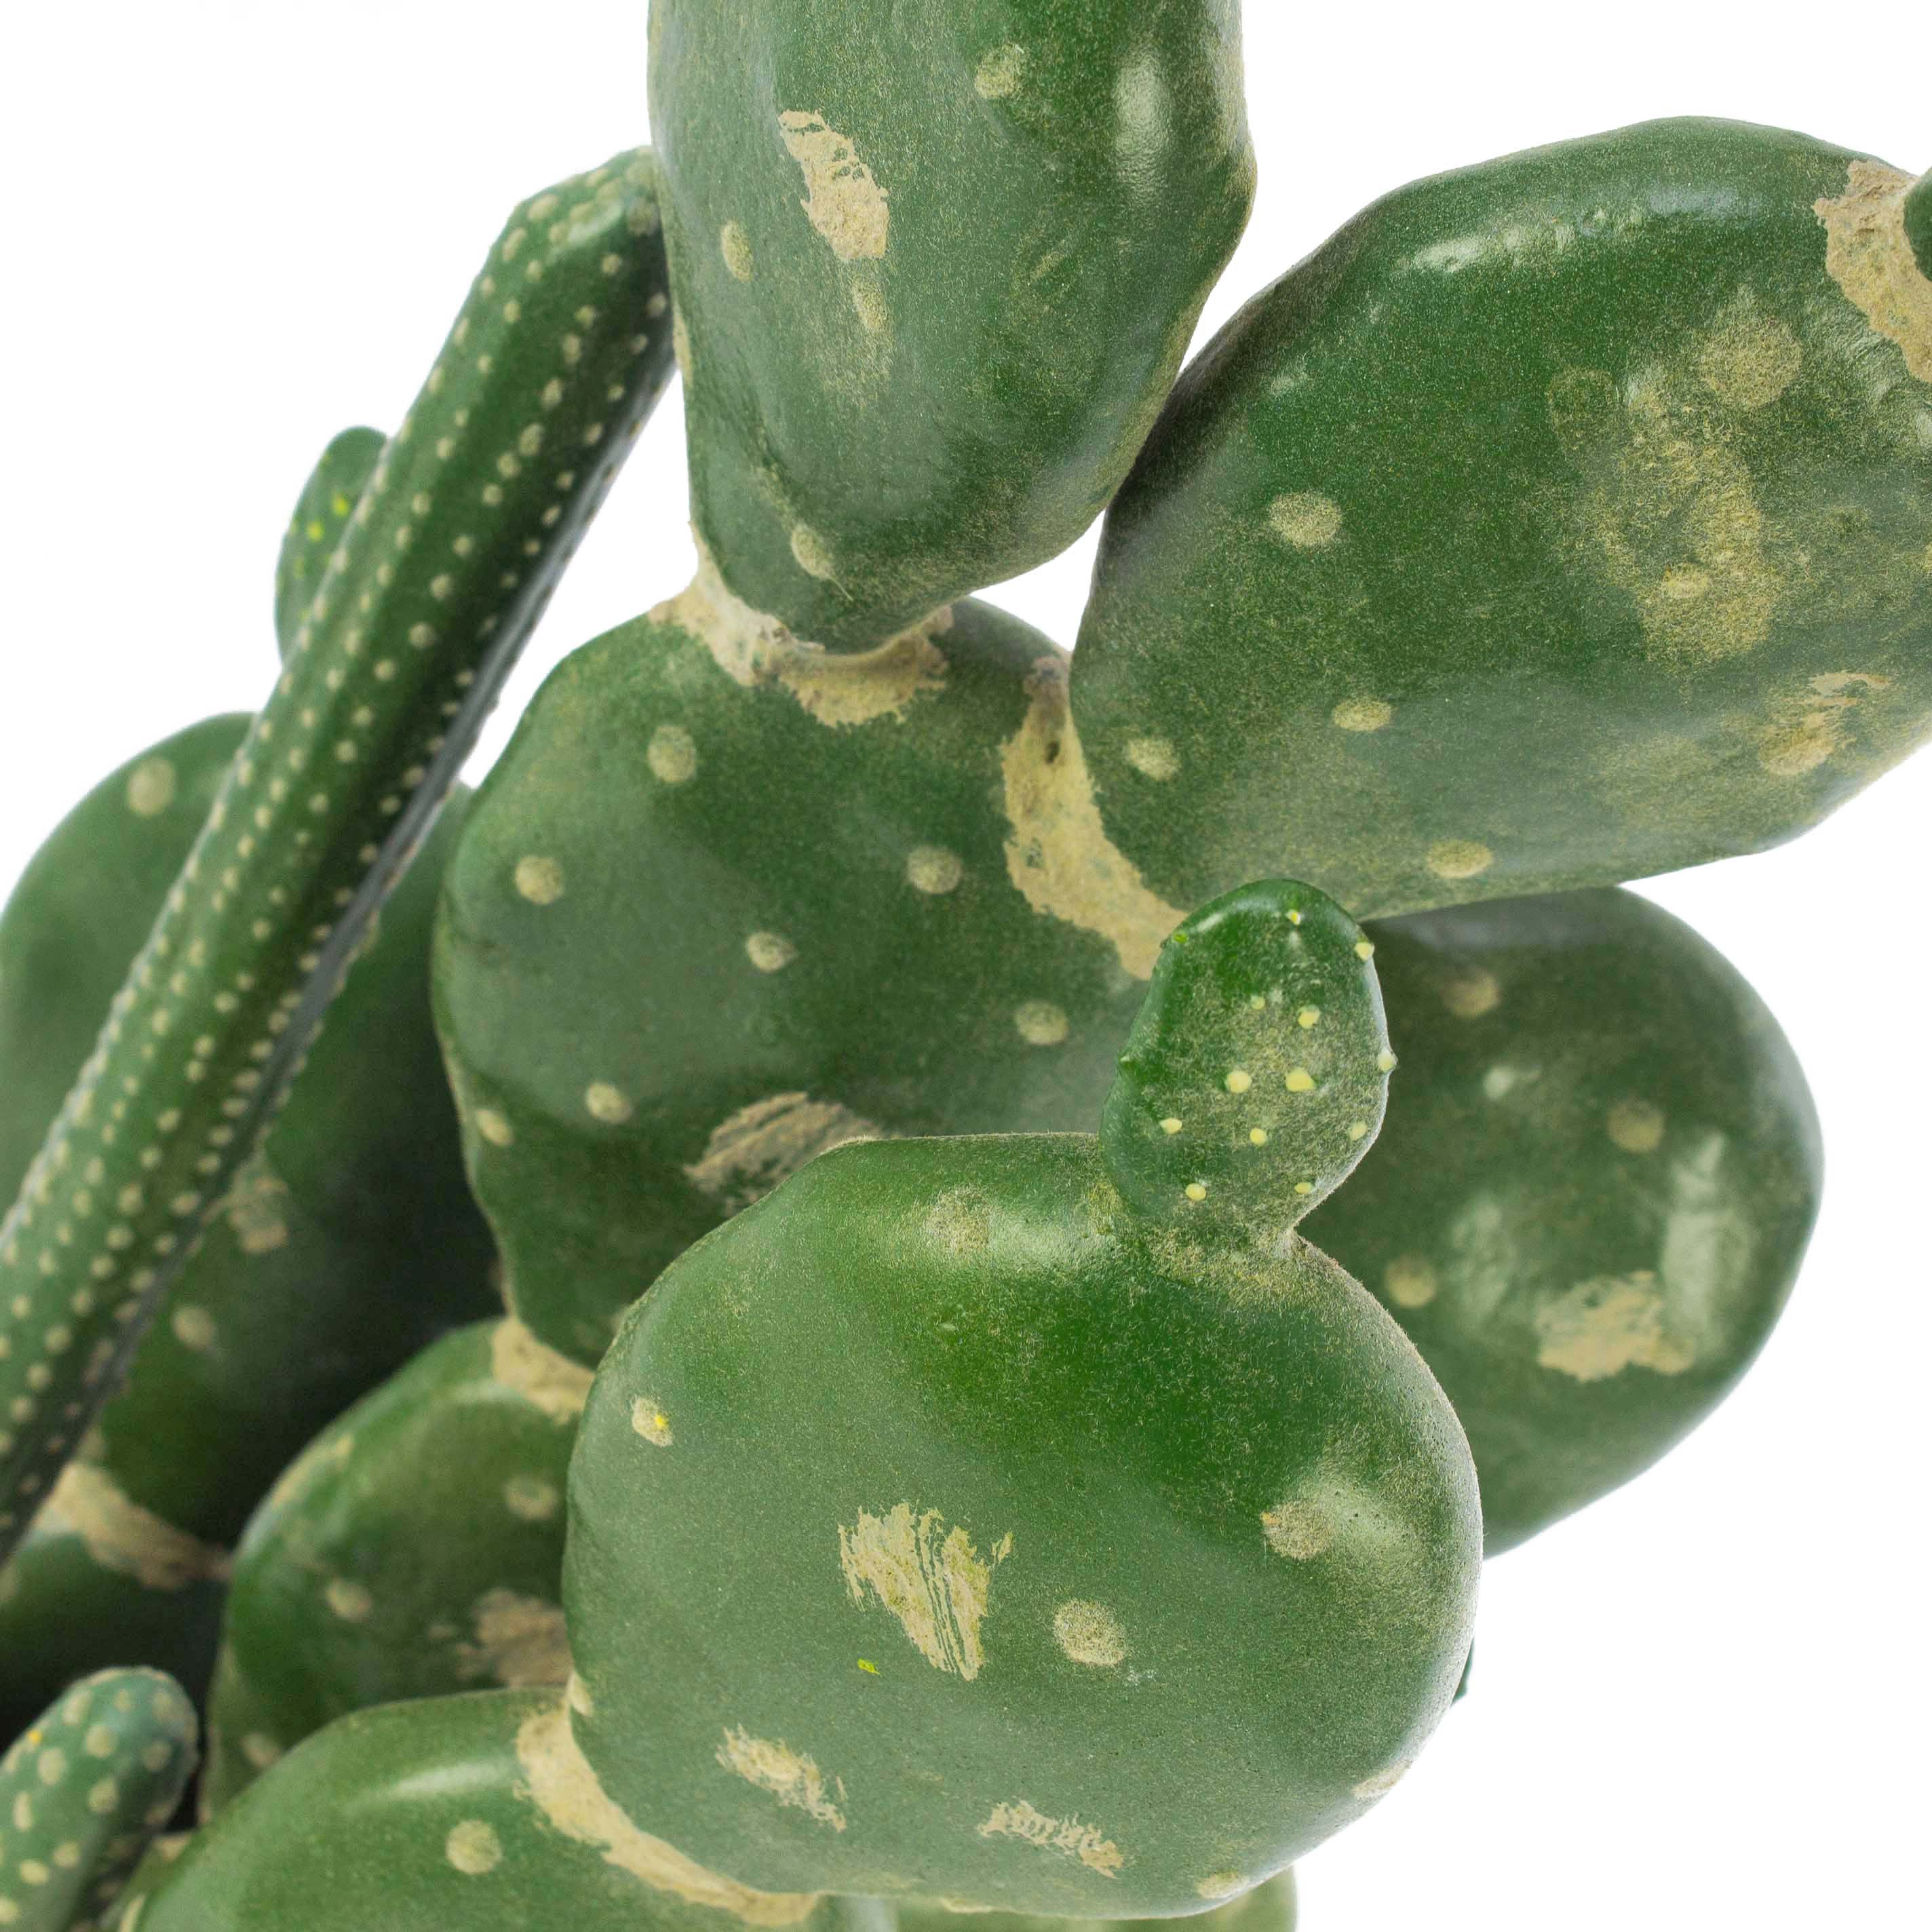 Acquista Utile melammina ornamentale di cactus artificiale